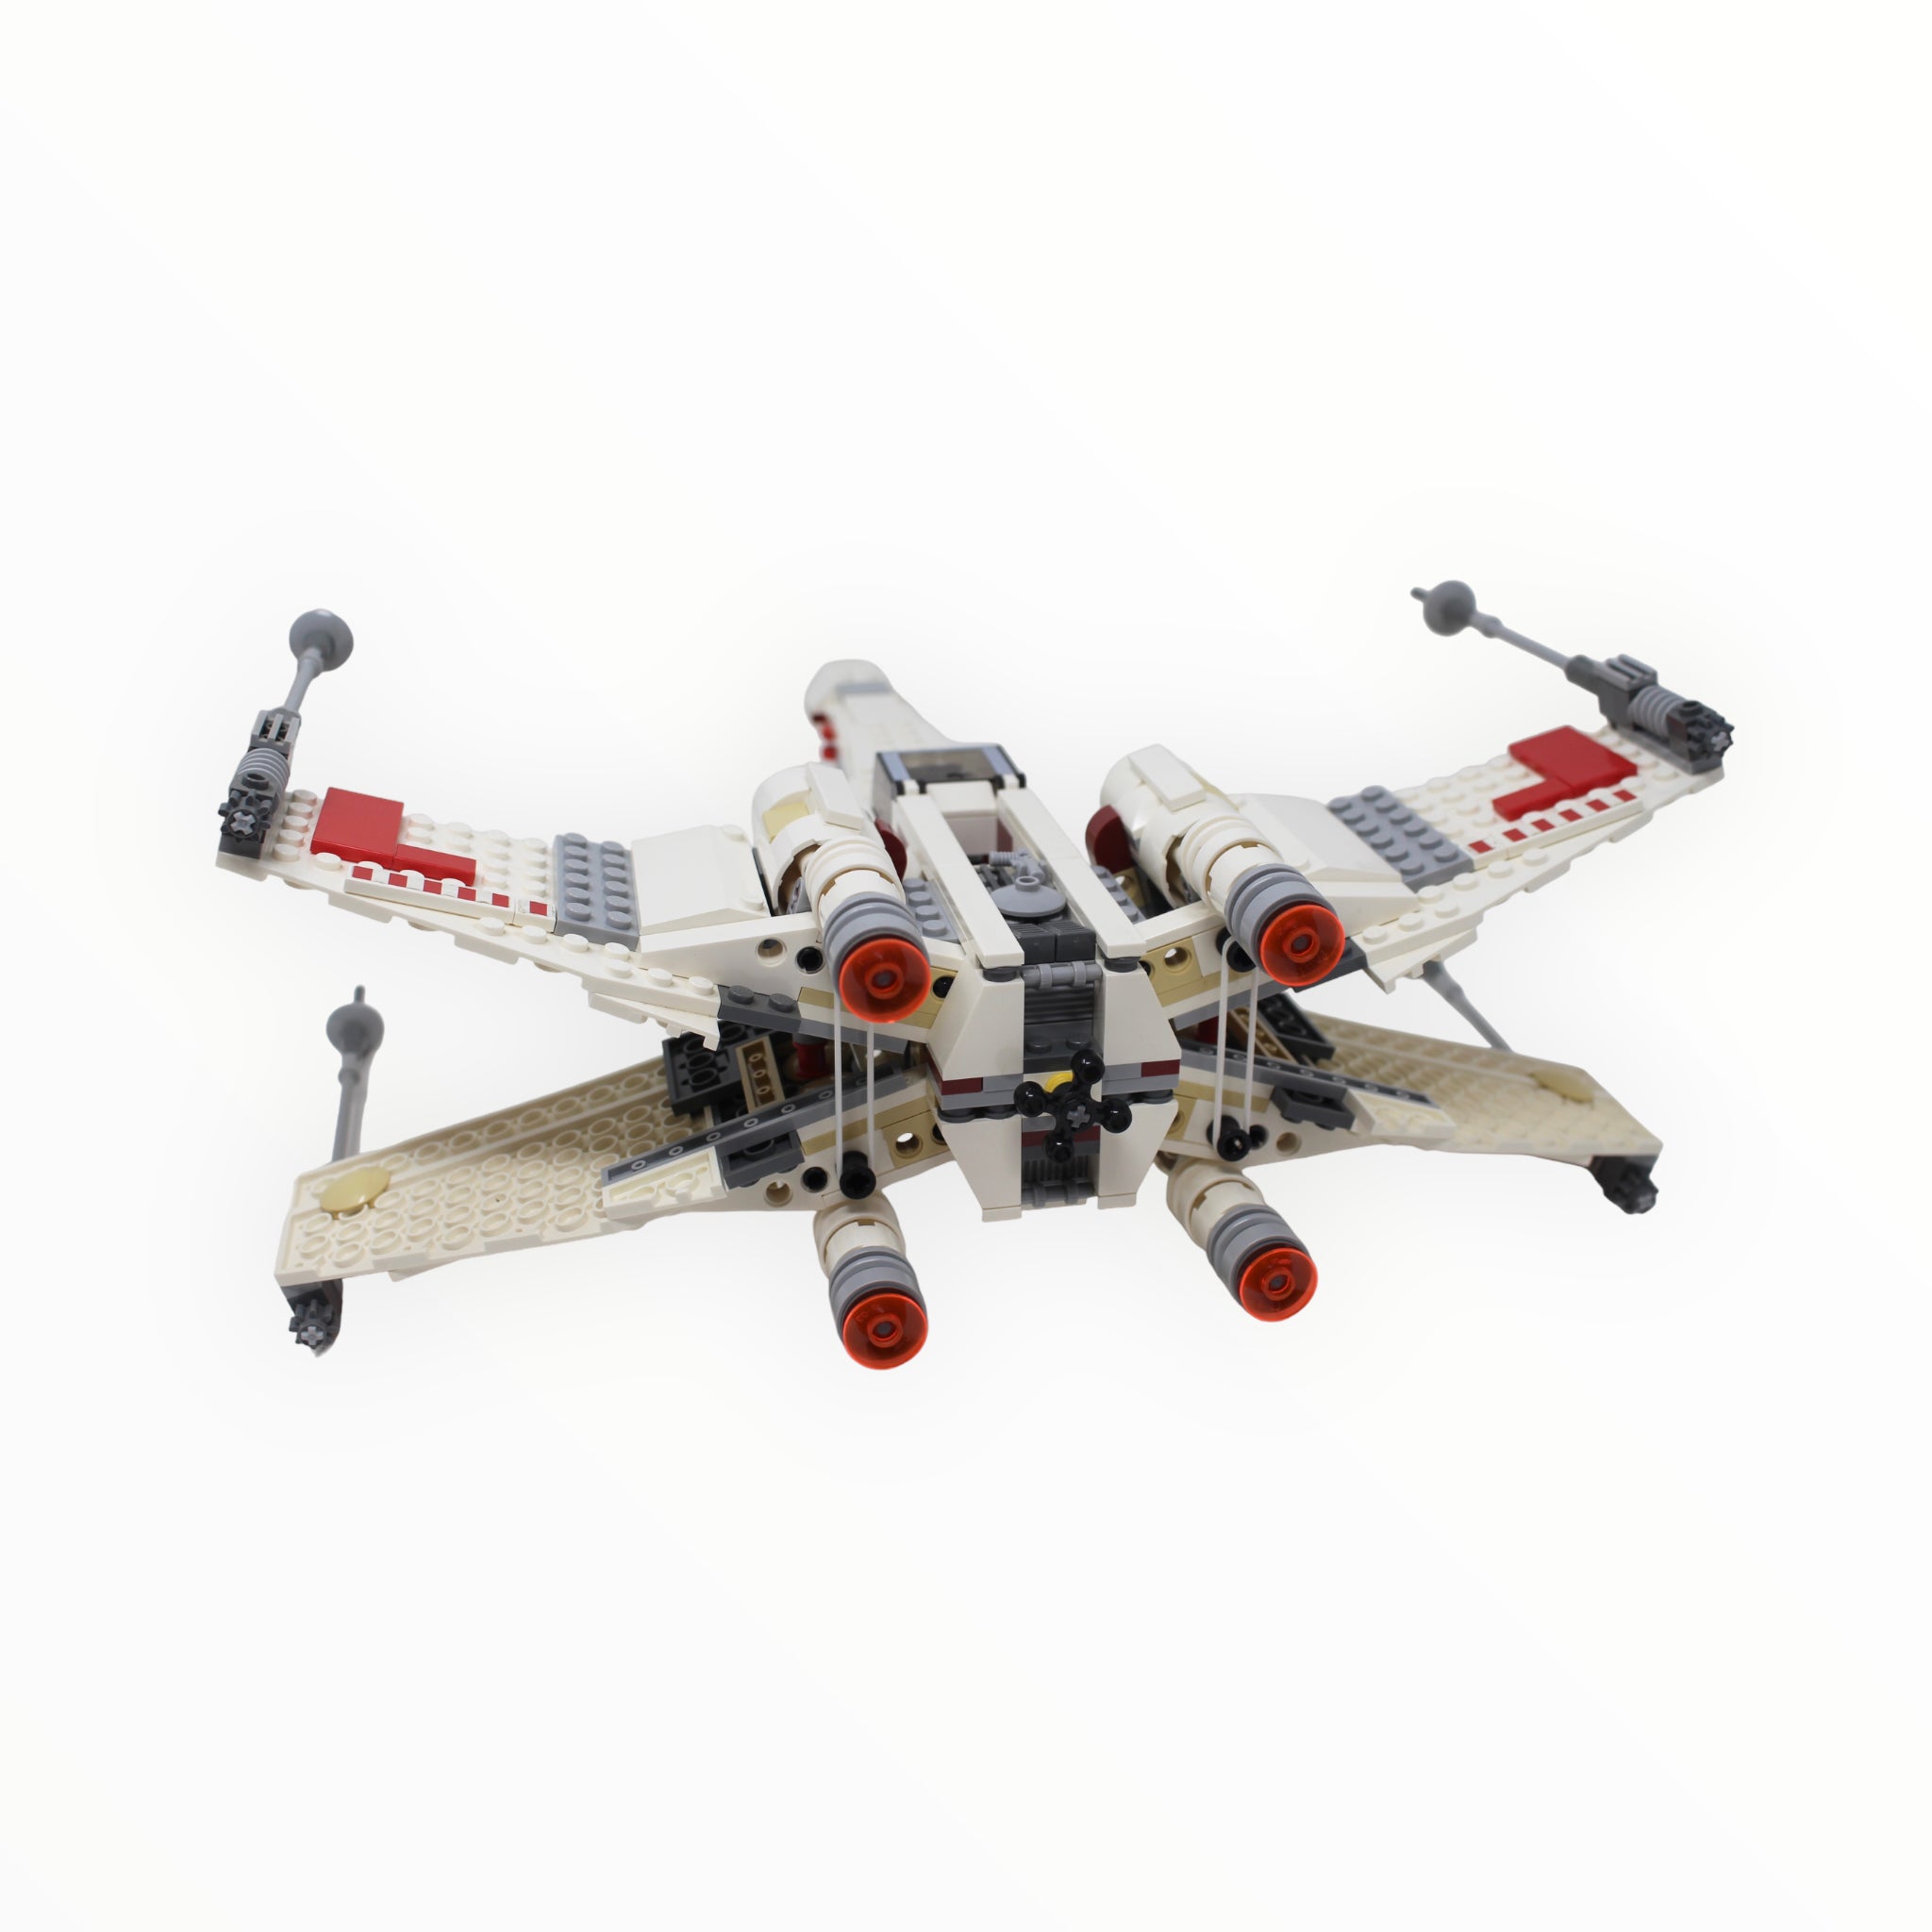 LEGO X-wing Starfighter Set 9493